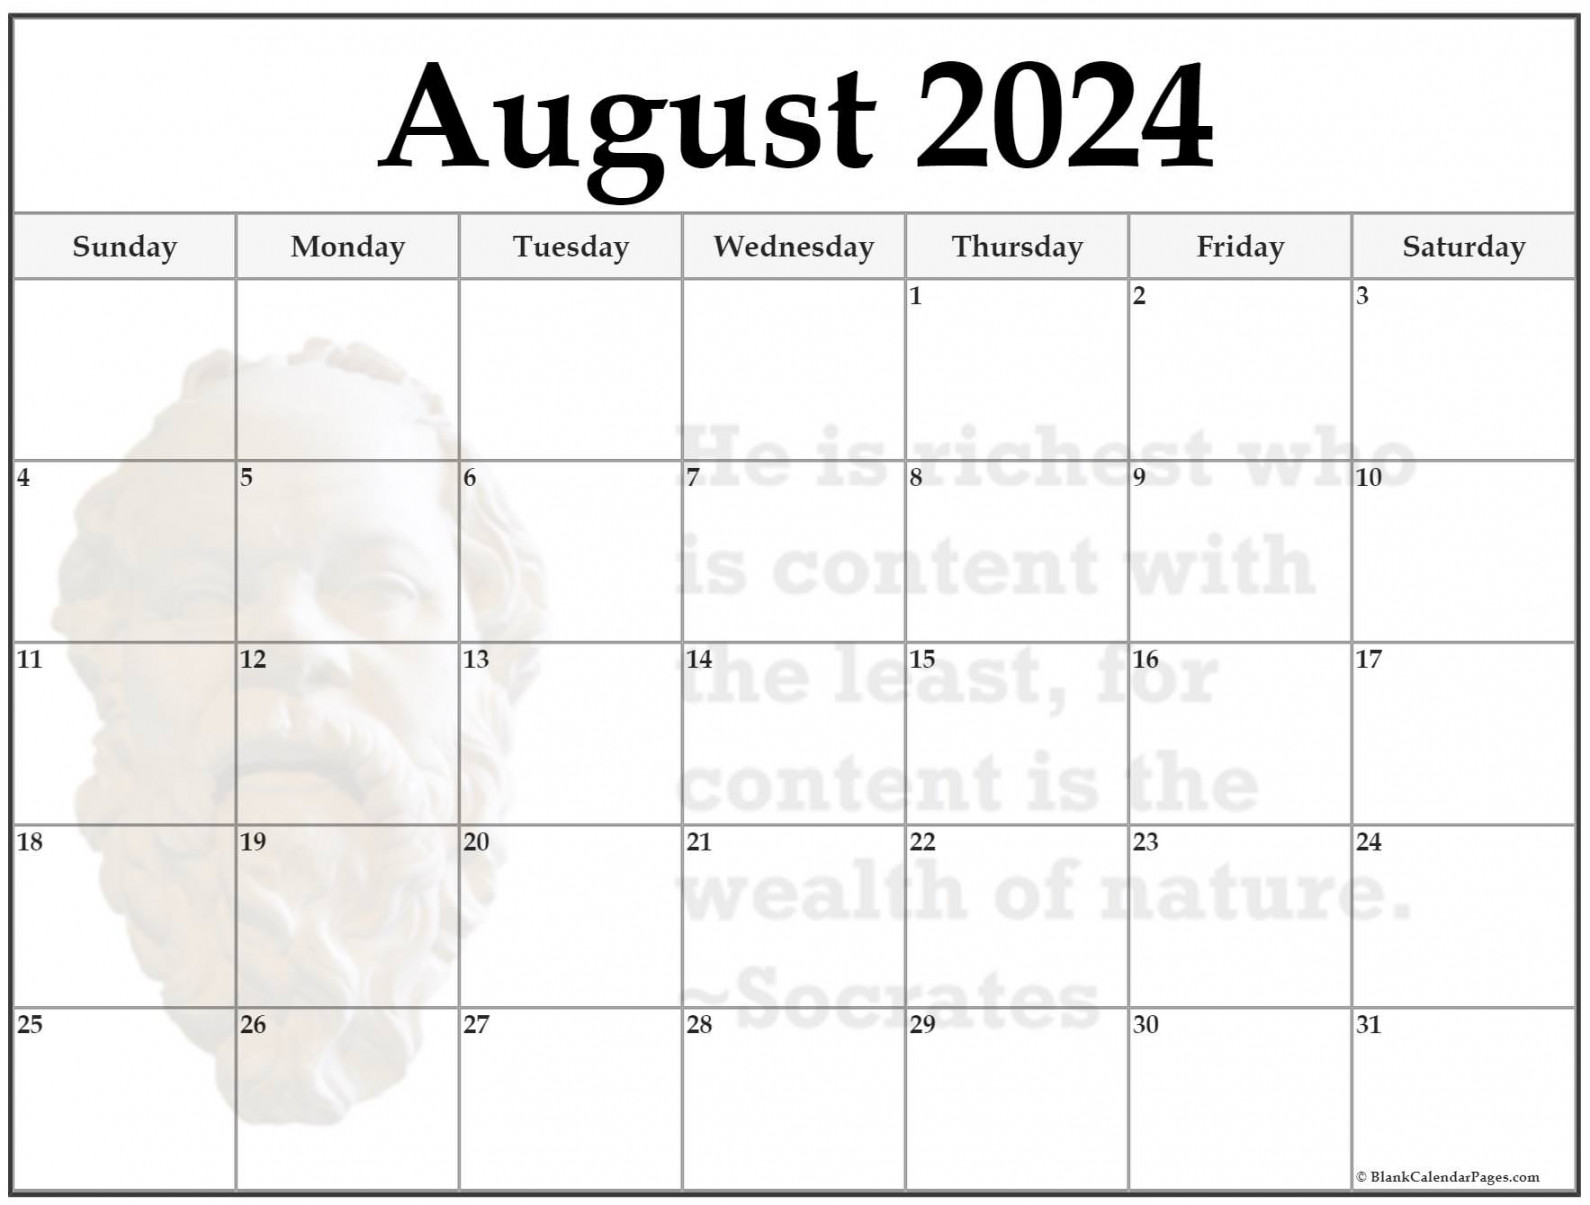 + August 20 quote calendars